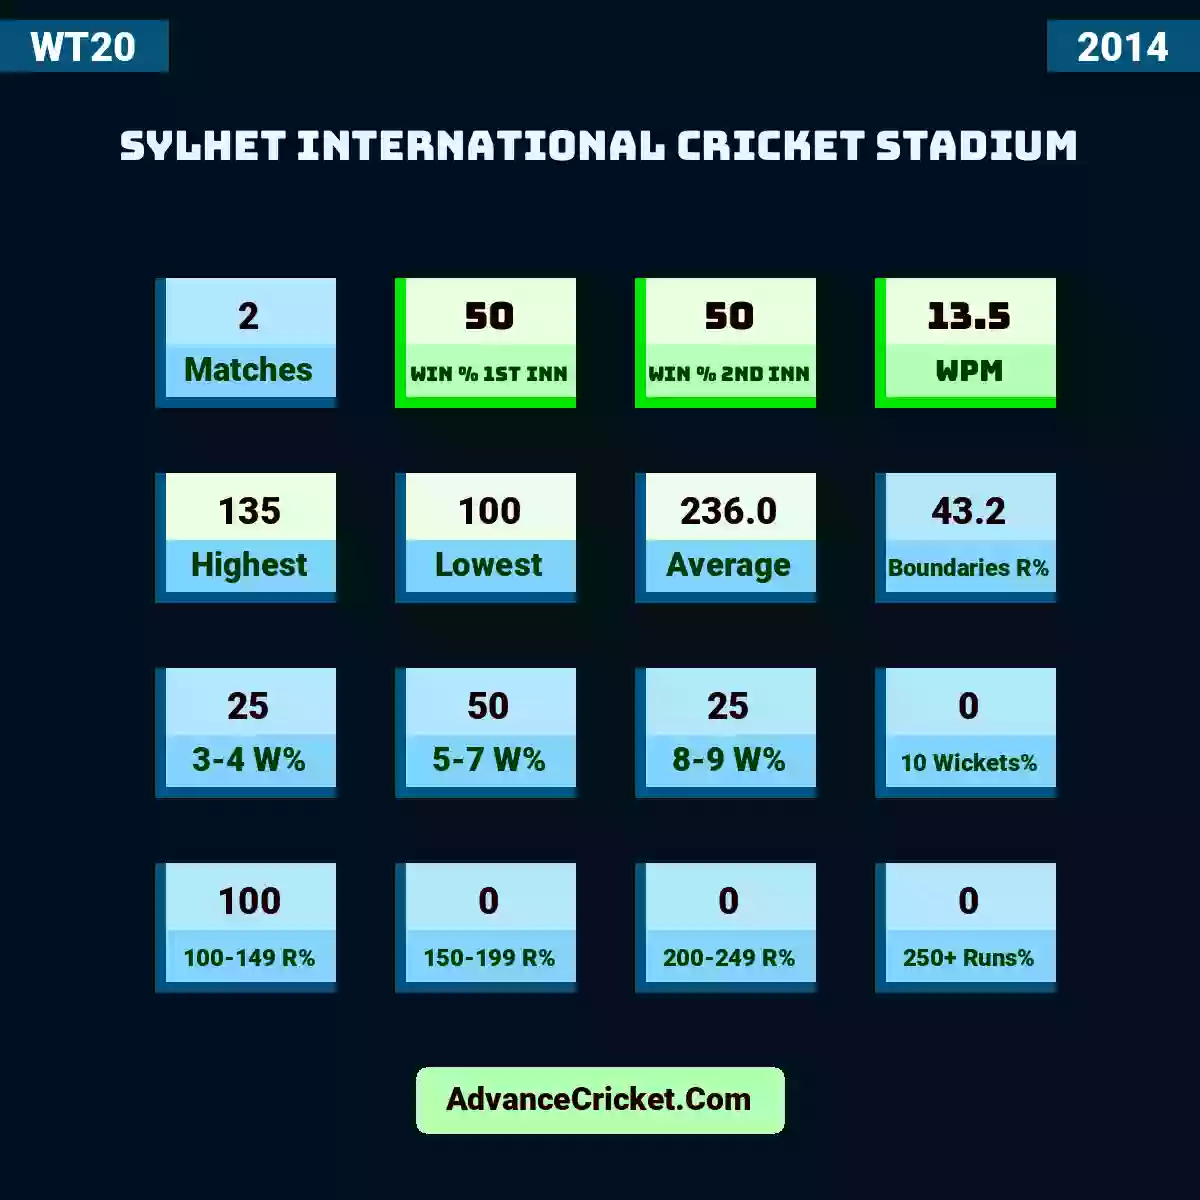 Image showing Sylhet International Cricket Stadium with Matches: 2, Win % 1st Inn: 50, Win % 2nd Inn: 50, WPM: 13.5, Highest: 135, Lowest: 100, Average: 236.0, Boundaries R%: 43.2, 3-4 W%: 25, 5-7 W%: 50, 8-9 W%: 25, 10 Wickets%: 0, 100-149 R%: 100, 150-199 R%: 0, 200-249 R%: 0, 250+ Runs%: 0.